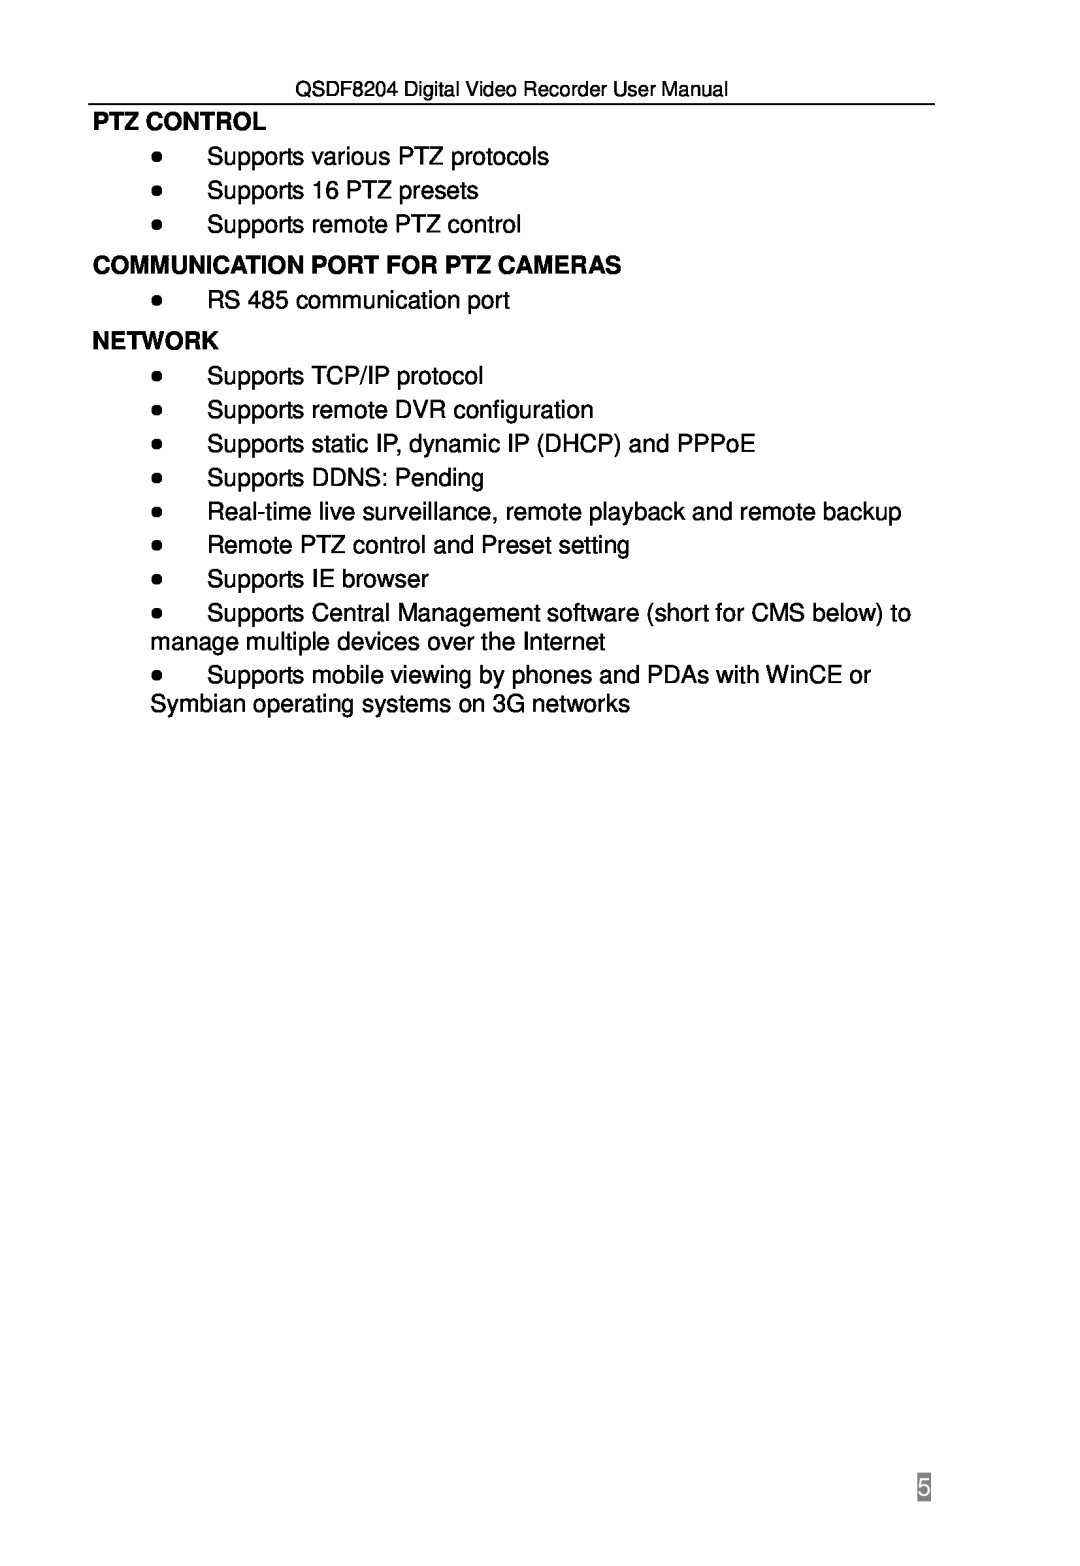 Q-See QSDF8204 user manual Ptz Control, Communication Port For Ptz Cameras, Network 